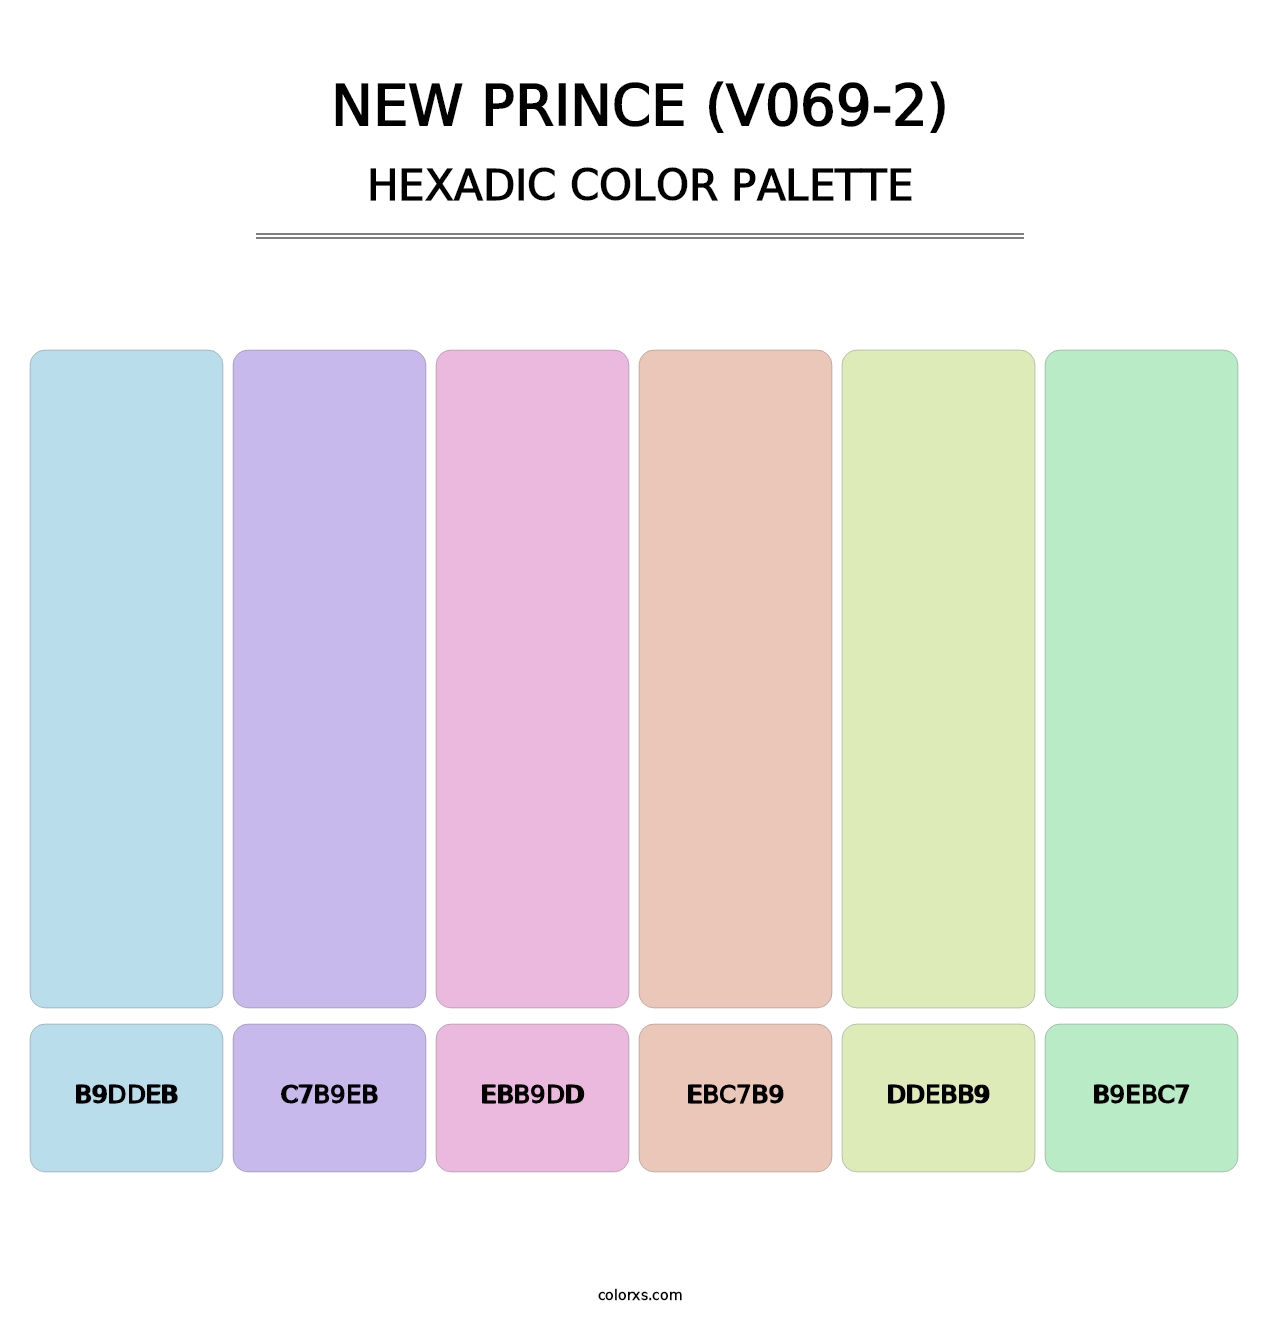 New Prince (V069-2) - Hexadic Color Palette